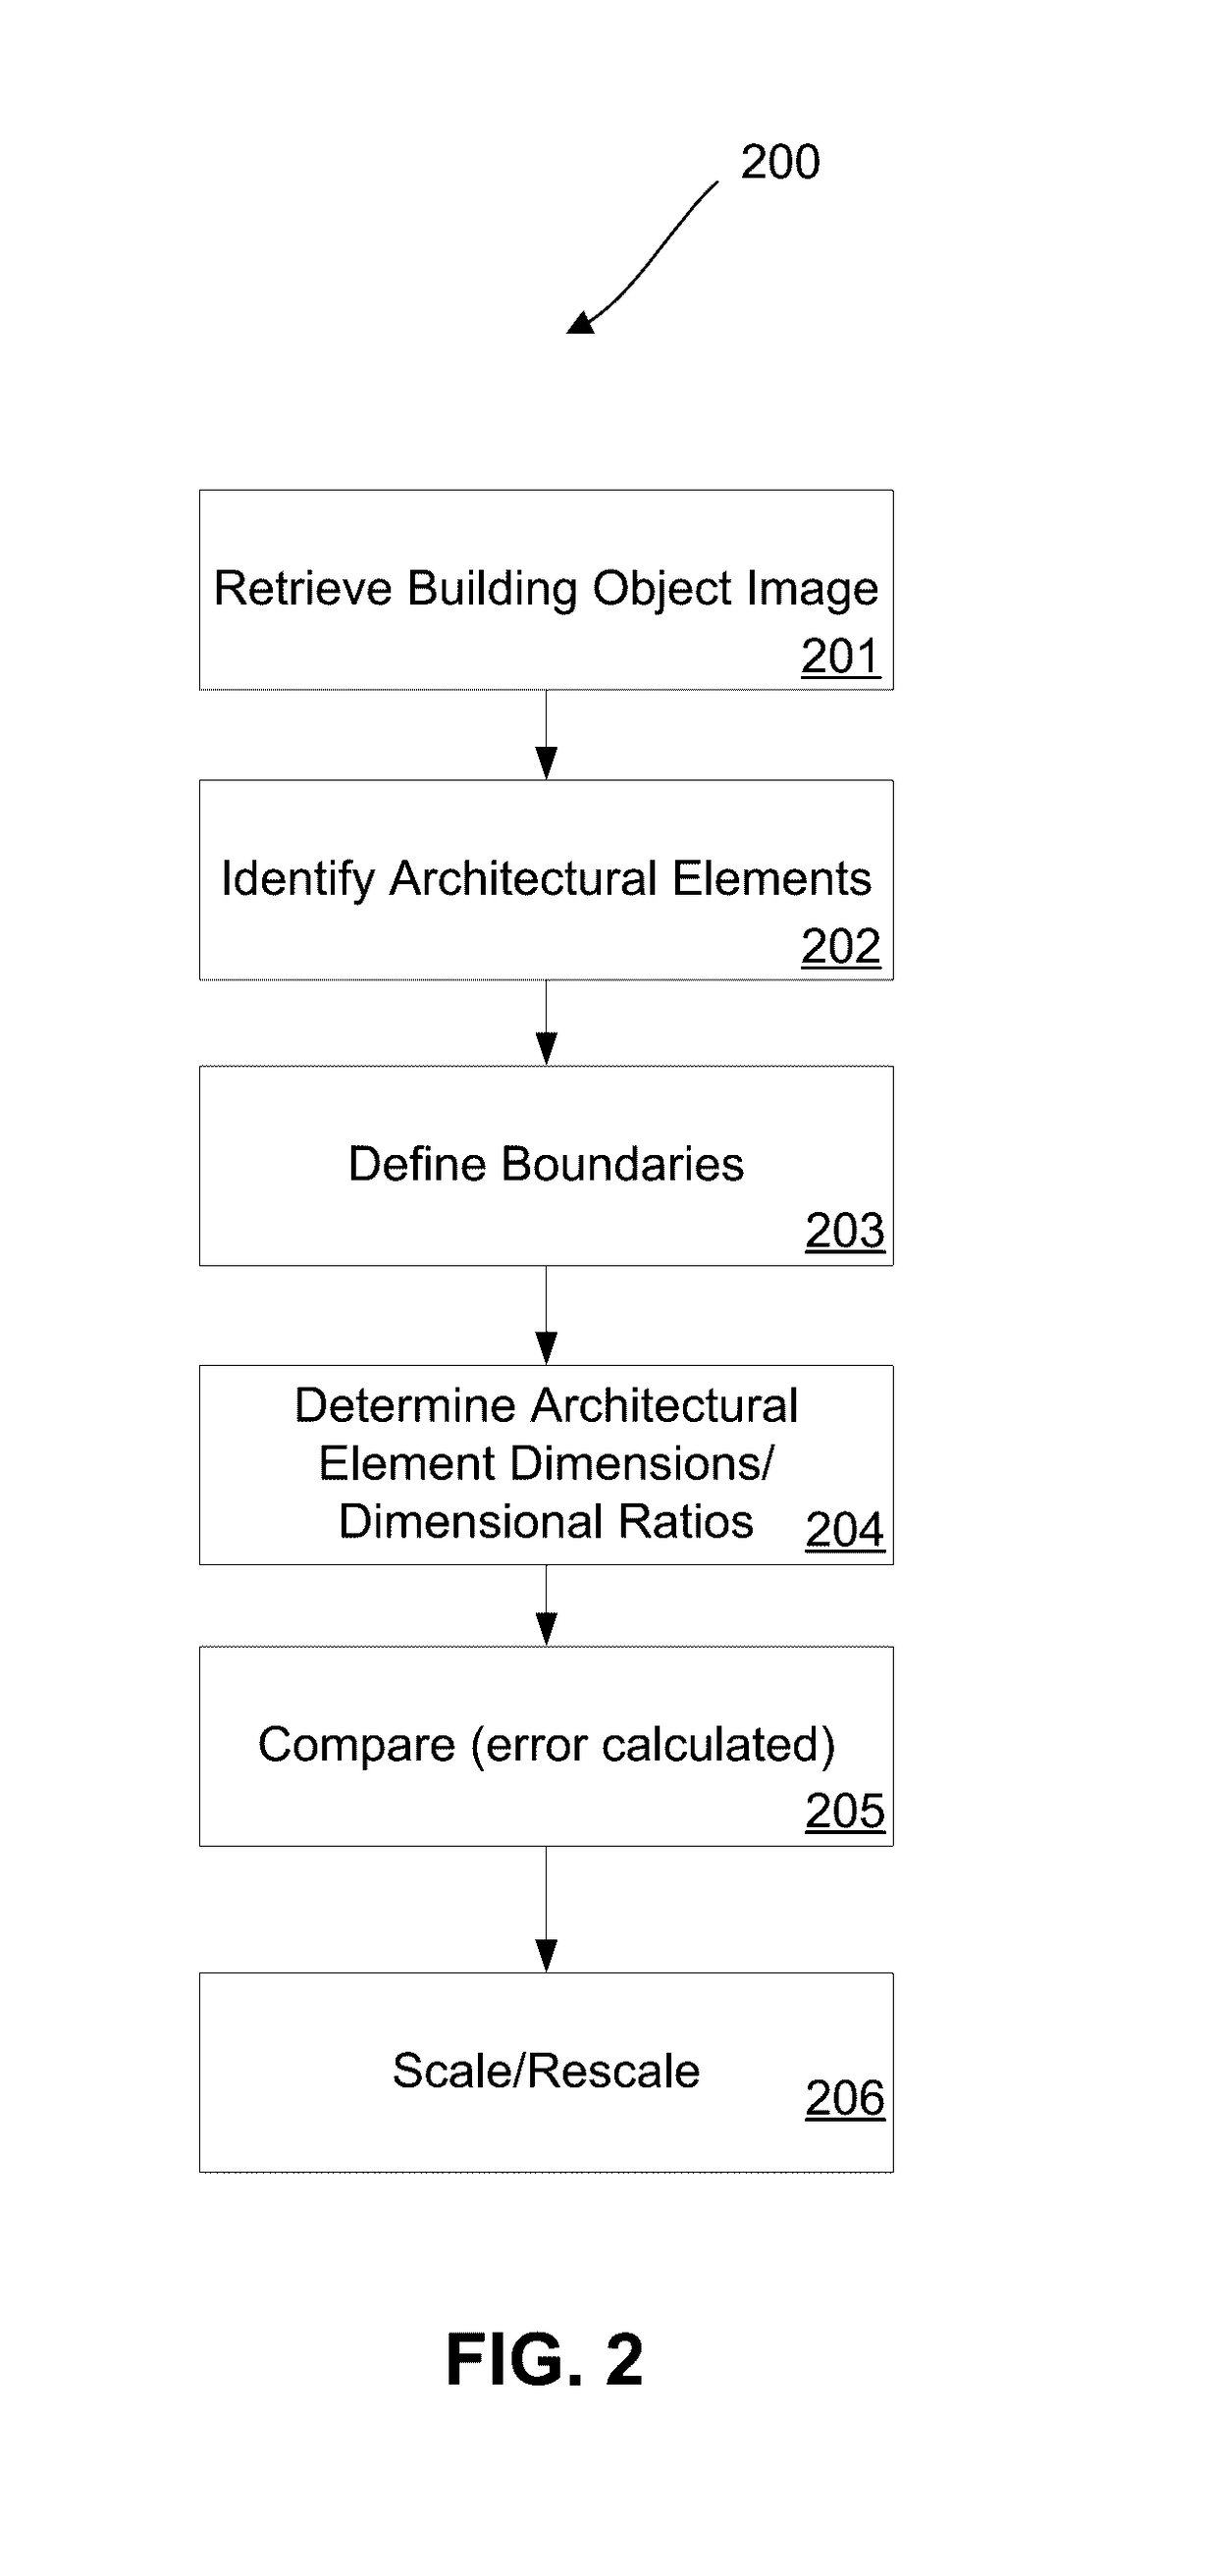 Multi-dimensional model dimensioning and scale error correction